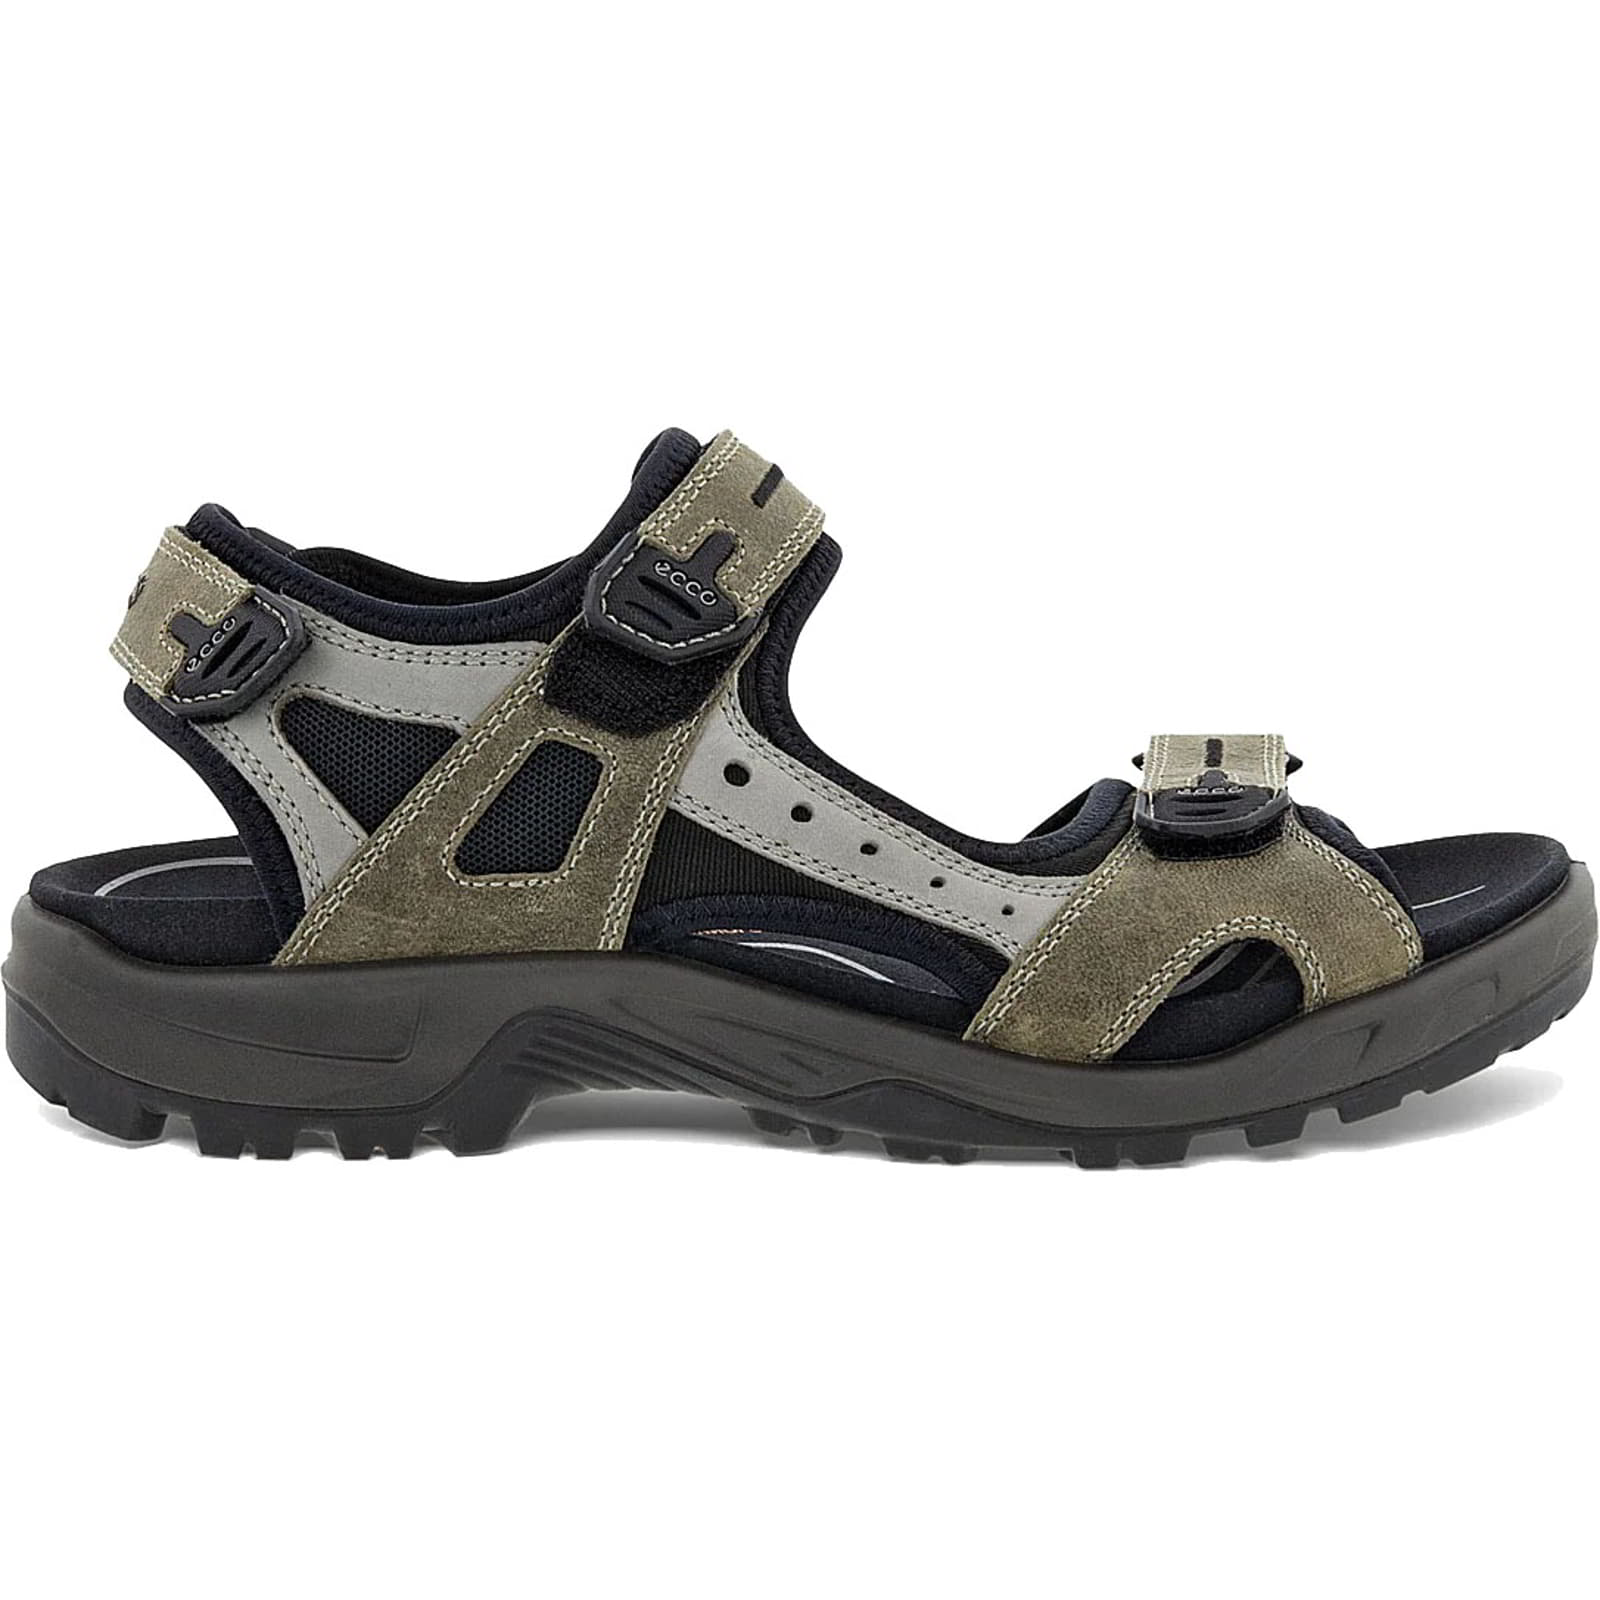 Ecco Shoes Mens Offroad Leather Walking Sandals - Tarmac Moon Rock 2951